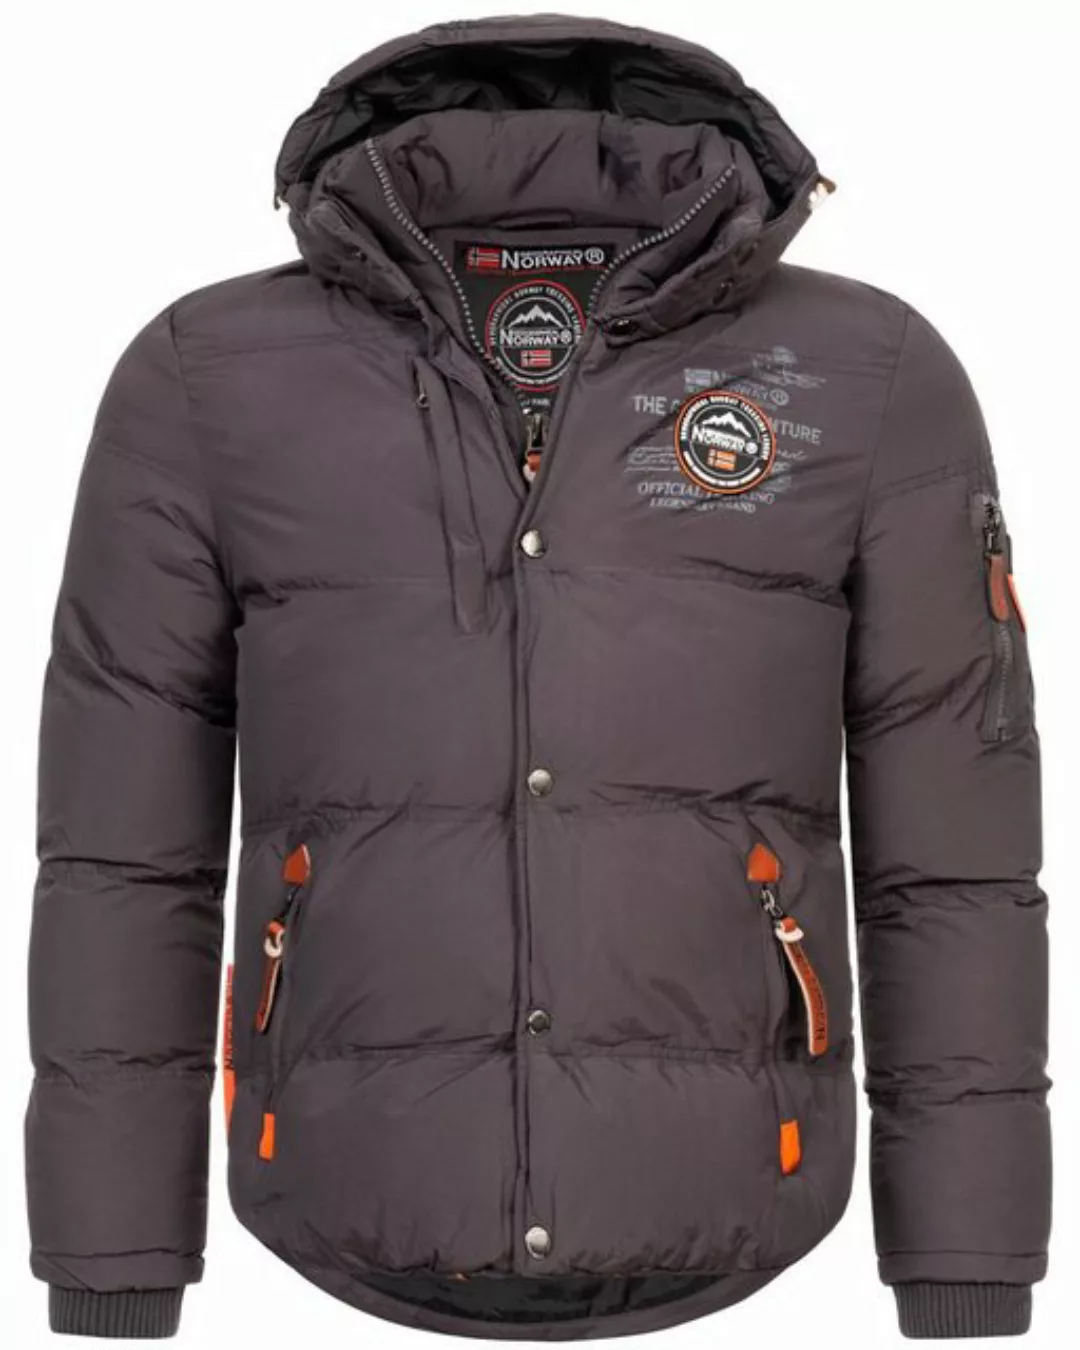 Geographical Norway Steppjacke Herren Winter Jacke Steppjacke Outdoor Jacke günstig online kaufen